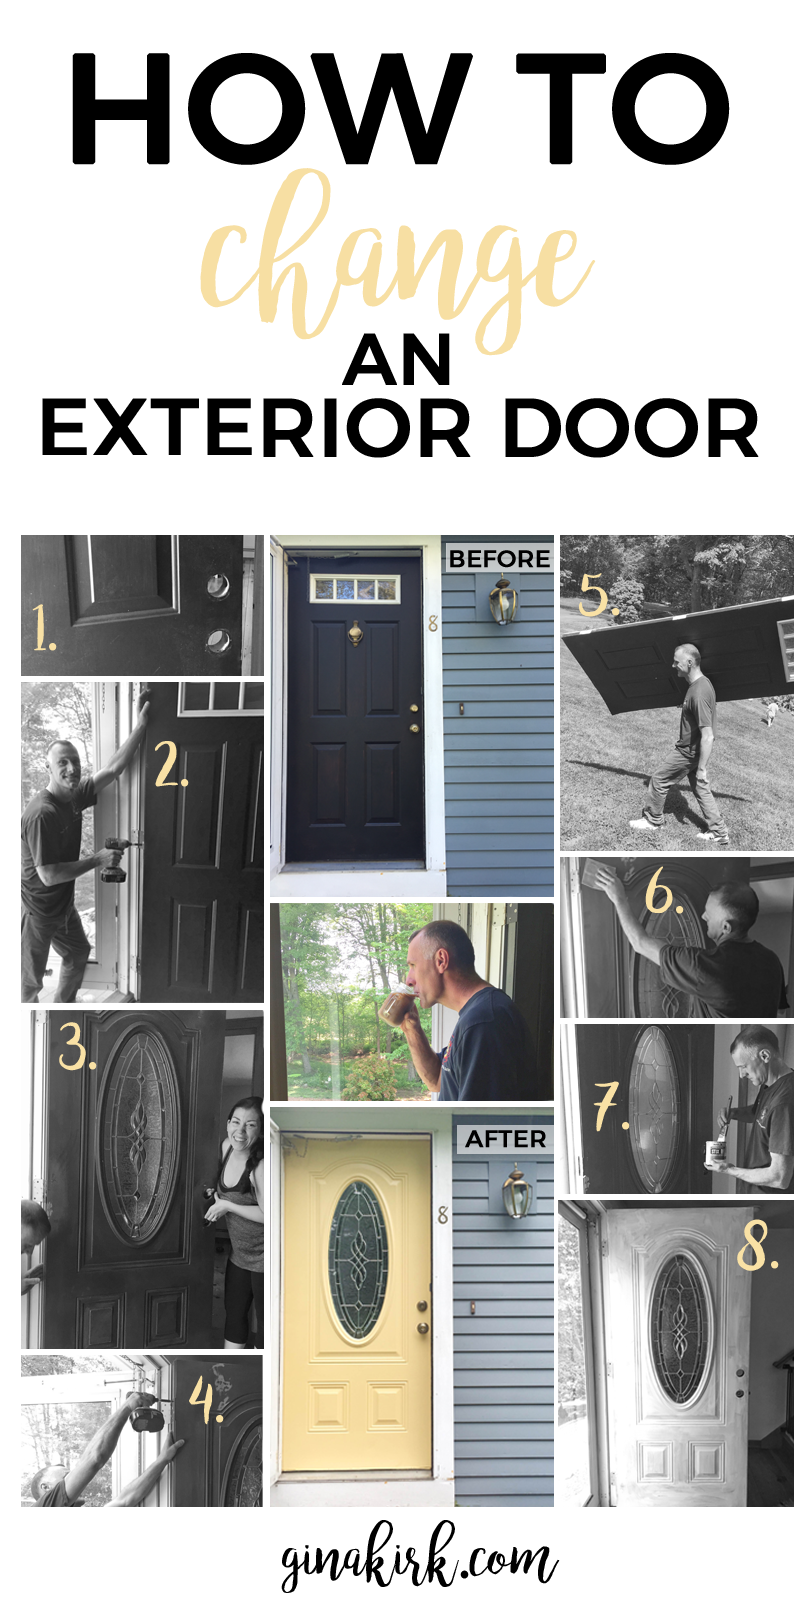 How to change an exterior door | Yellow front door before and after | #SToKCoffee #cbias #ad